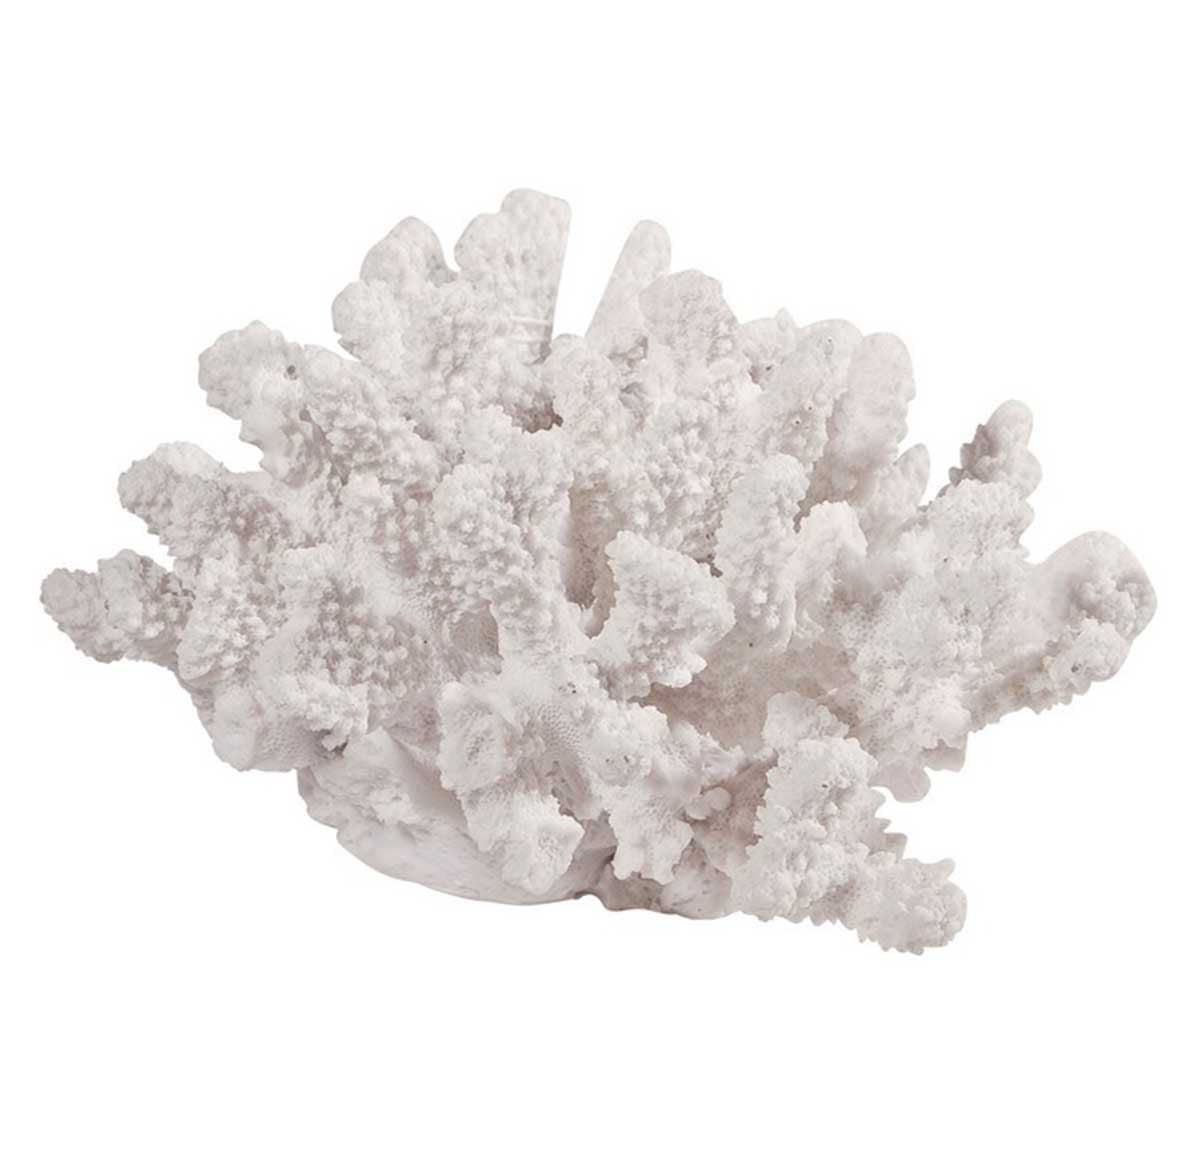 Faux Delicate Coral Accent - Bright White | Home Decor | Mish Lifestyle